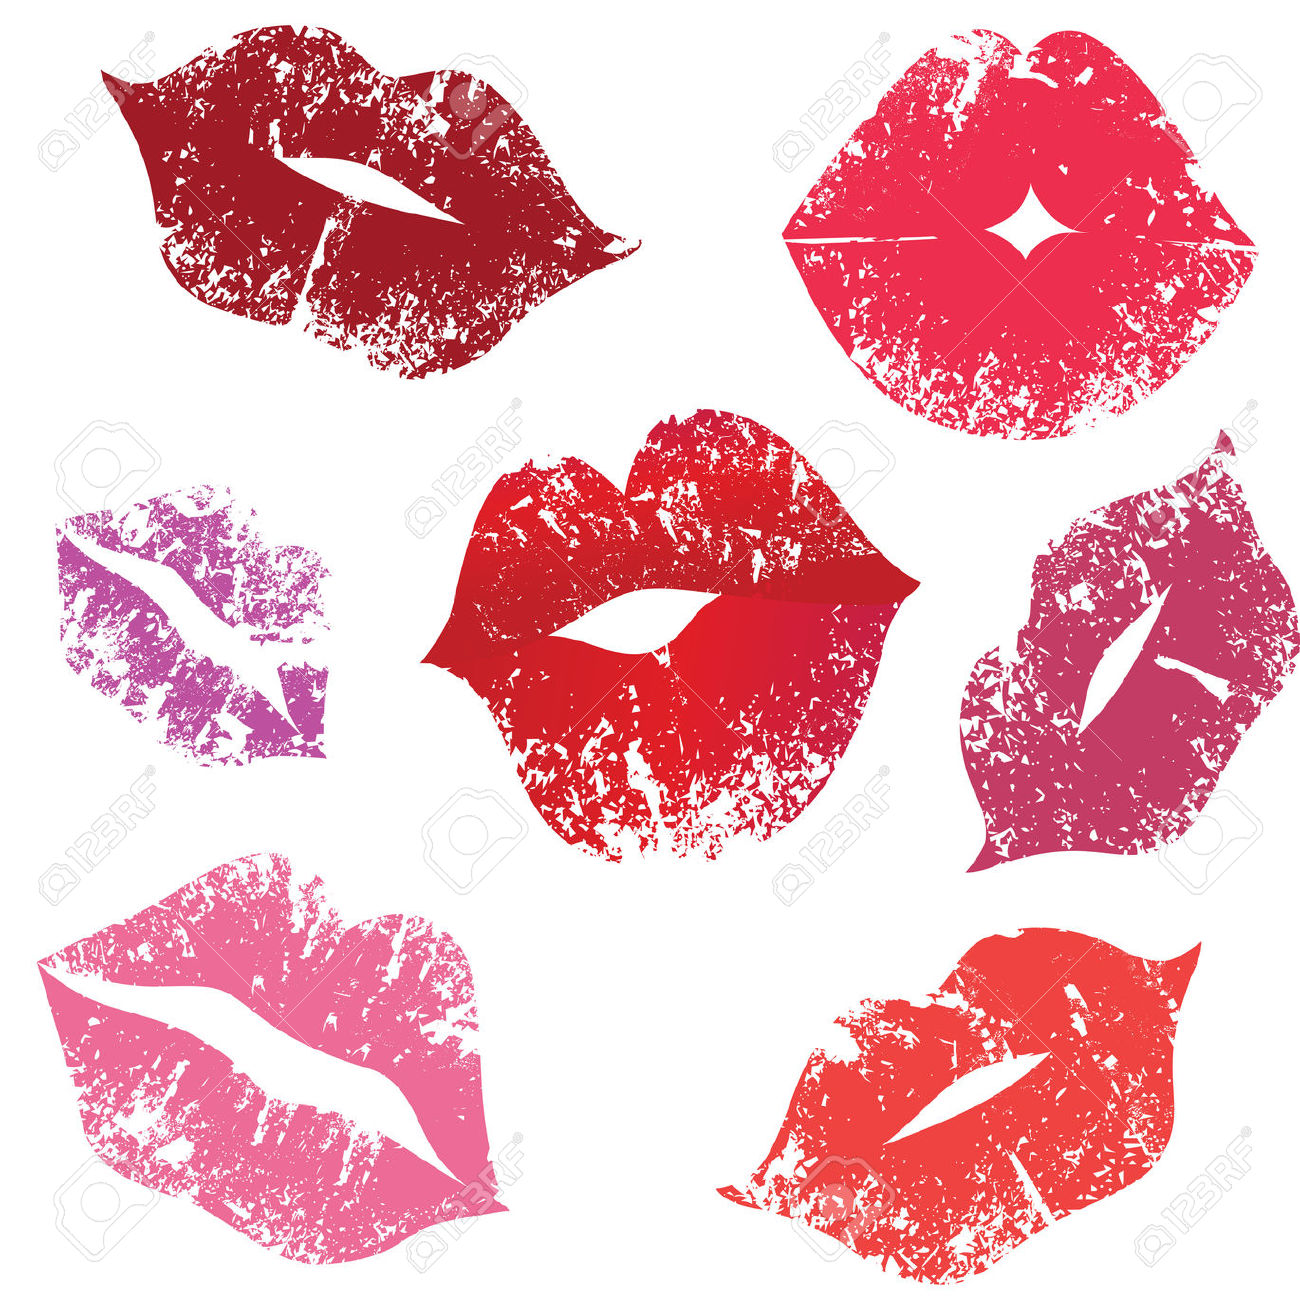 kiss lips clip art - photo #46